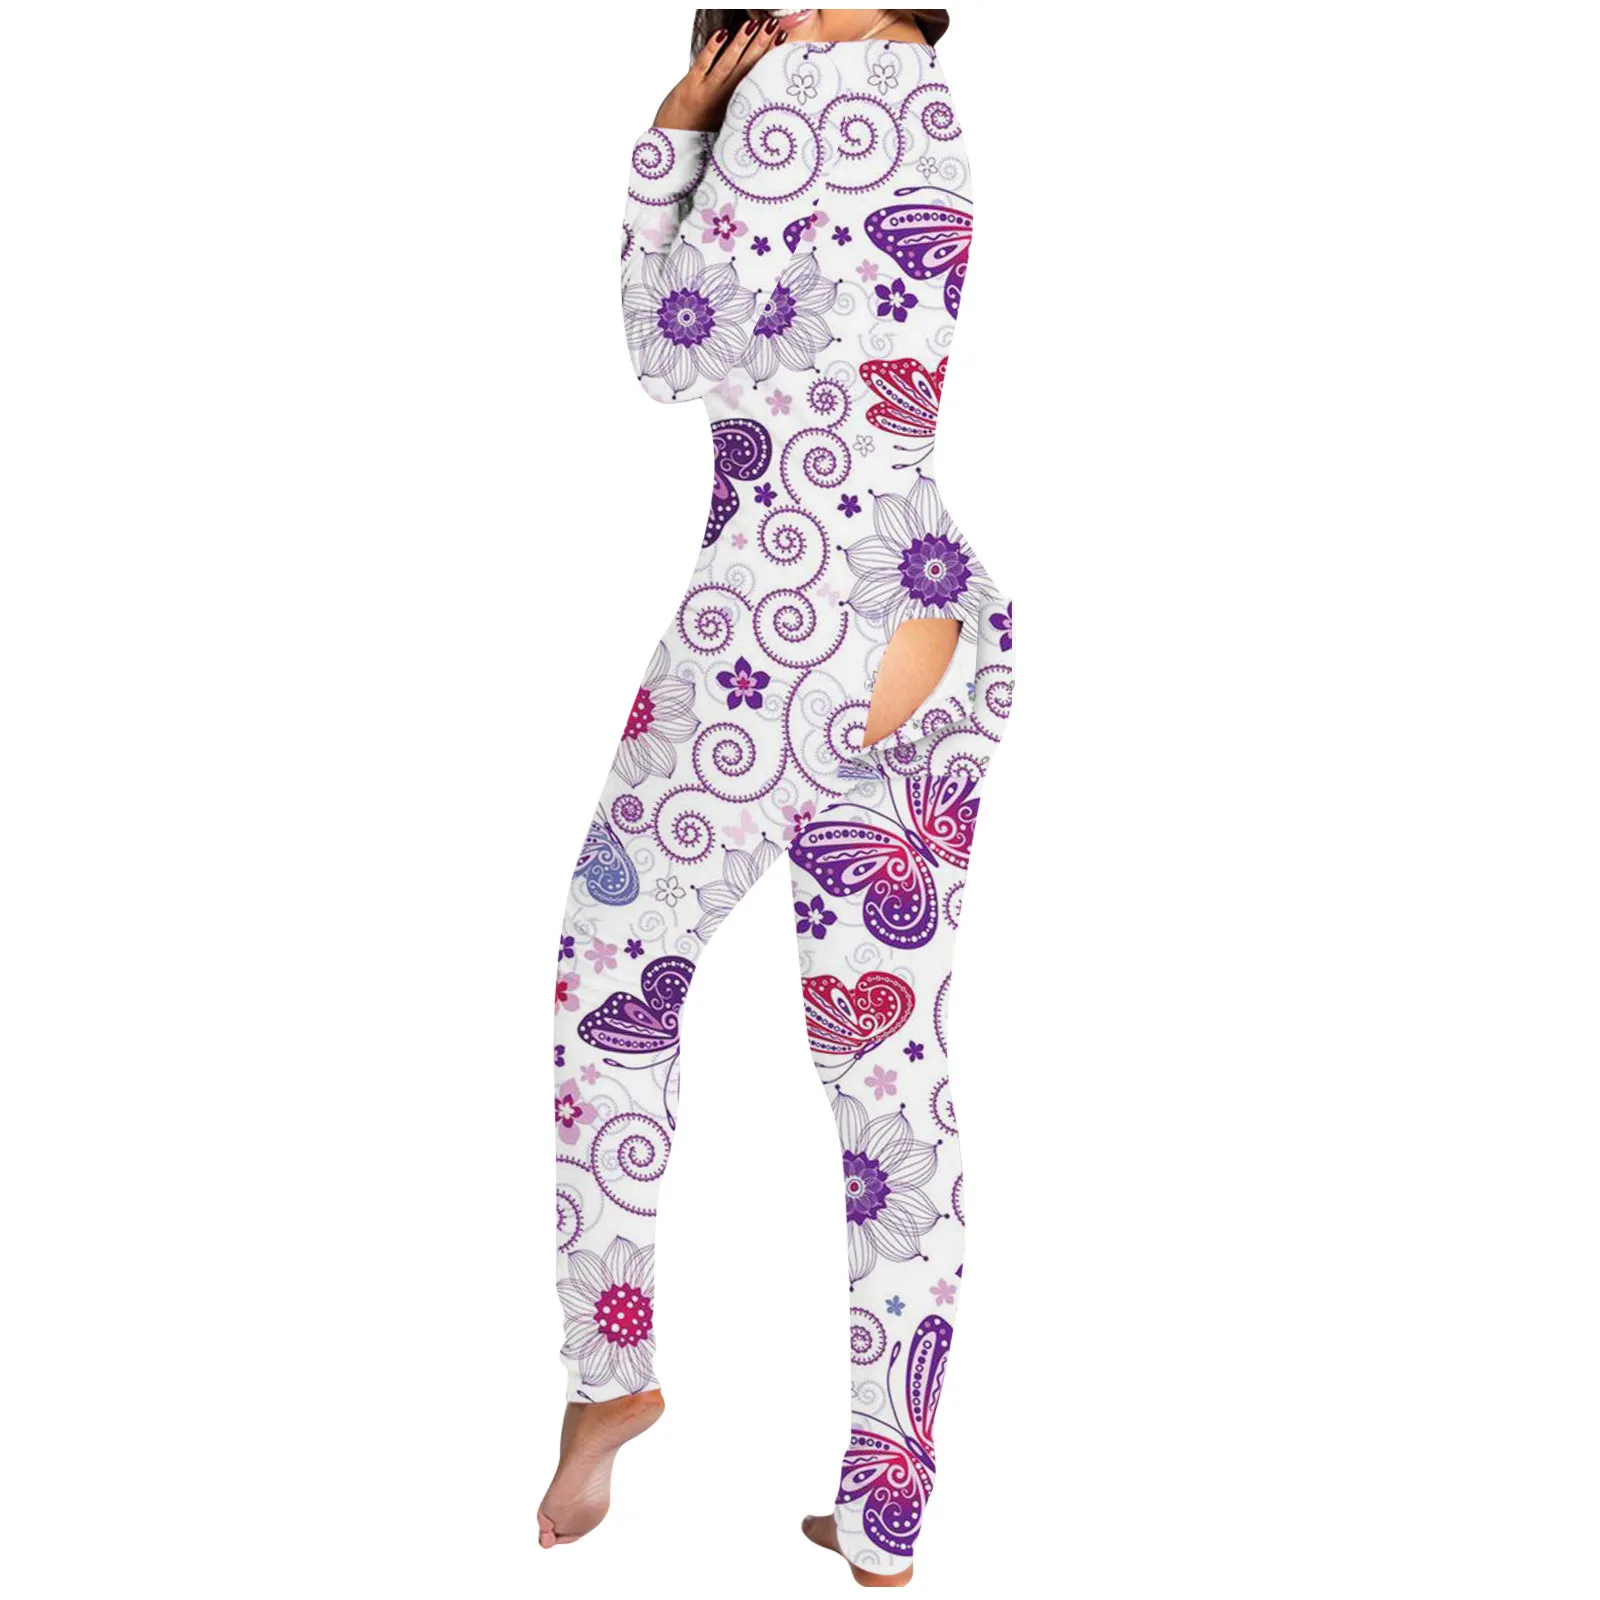 Women's one piece pajamas with drop seat